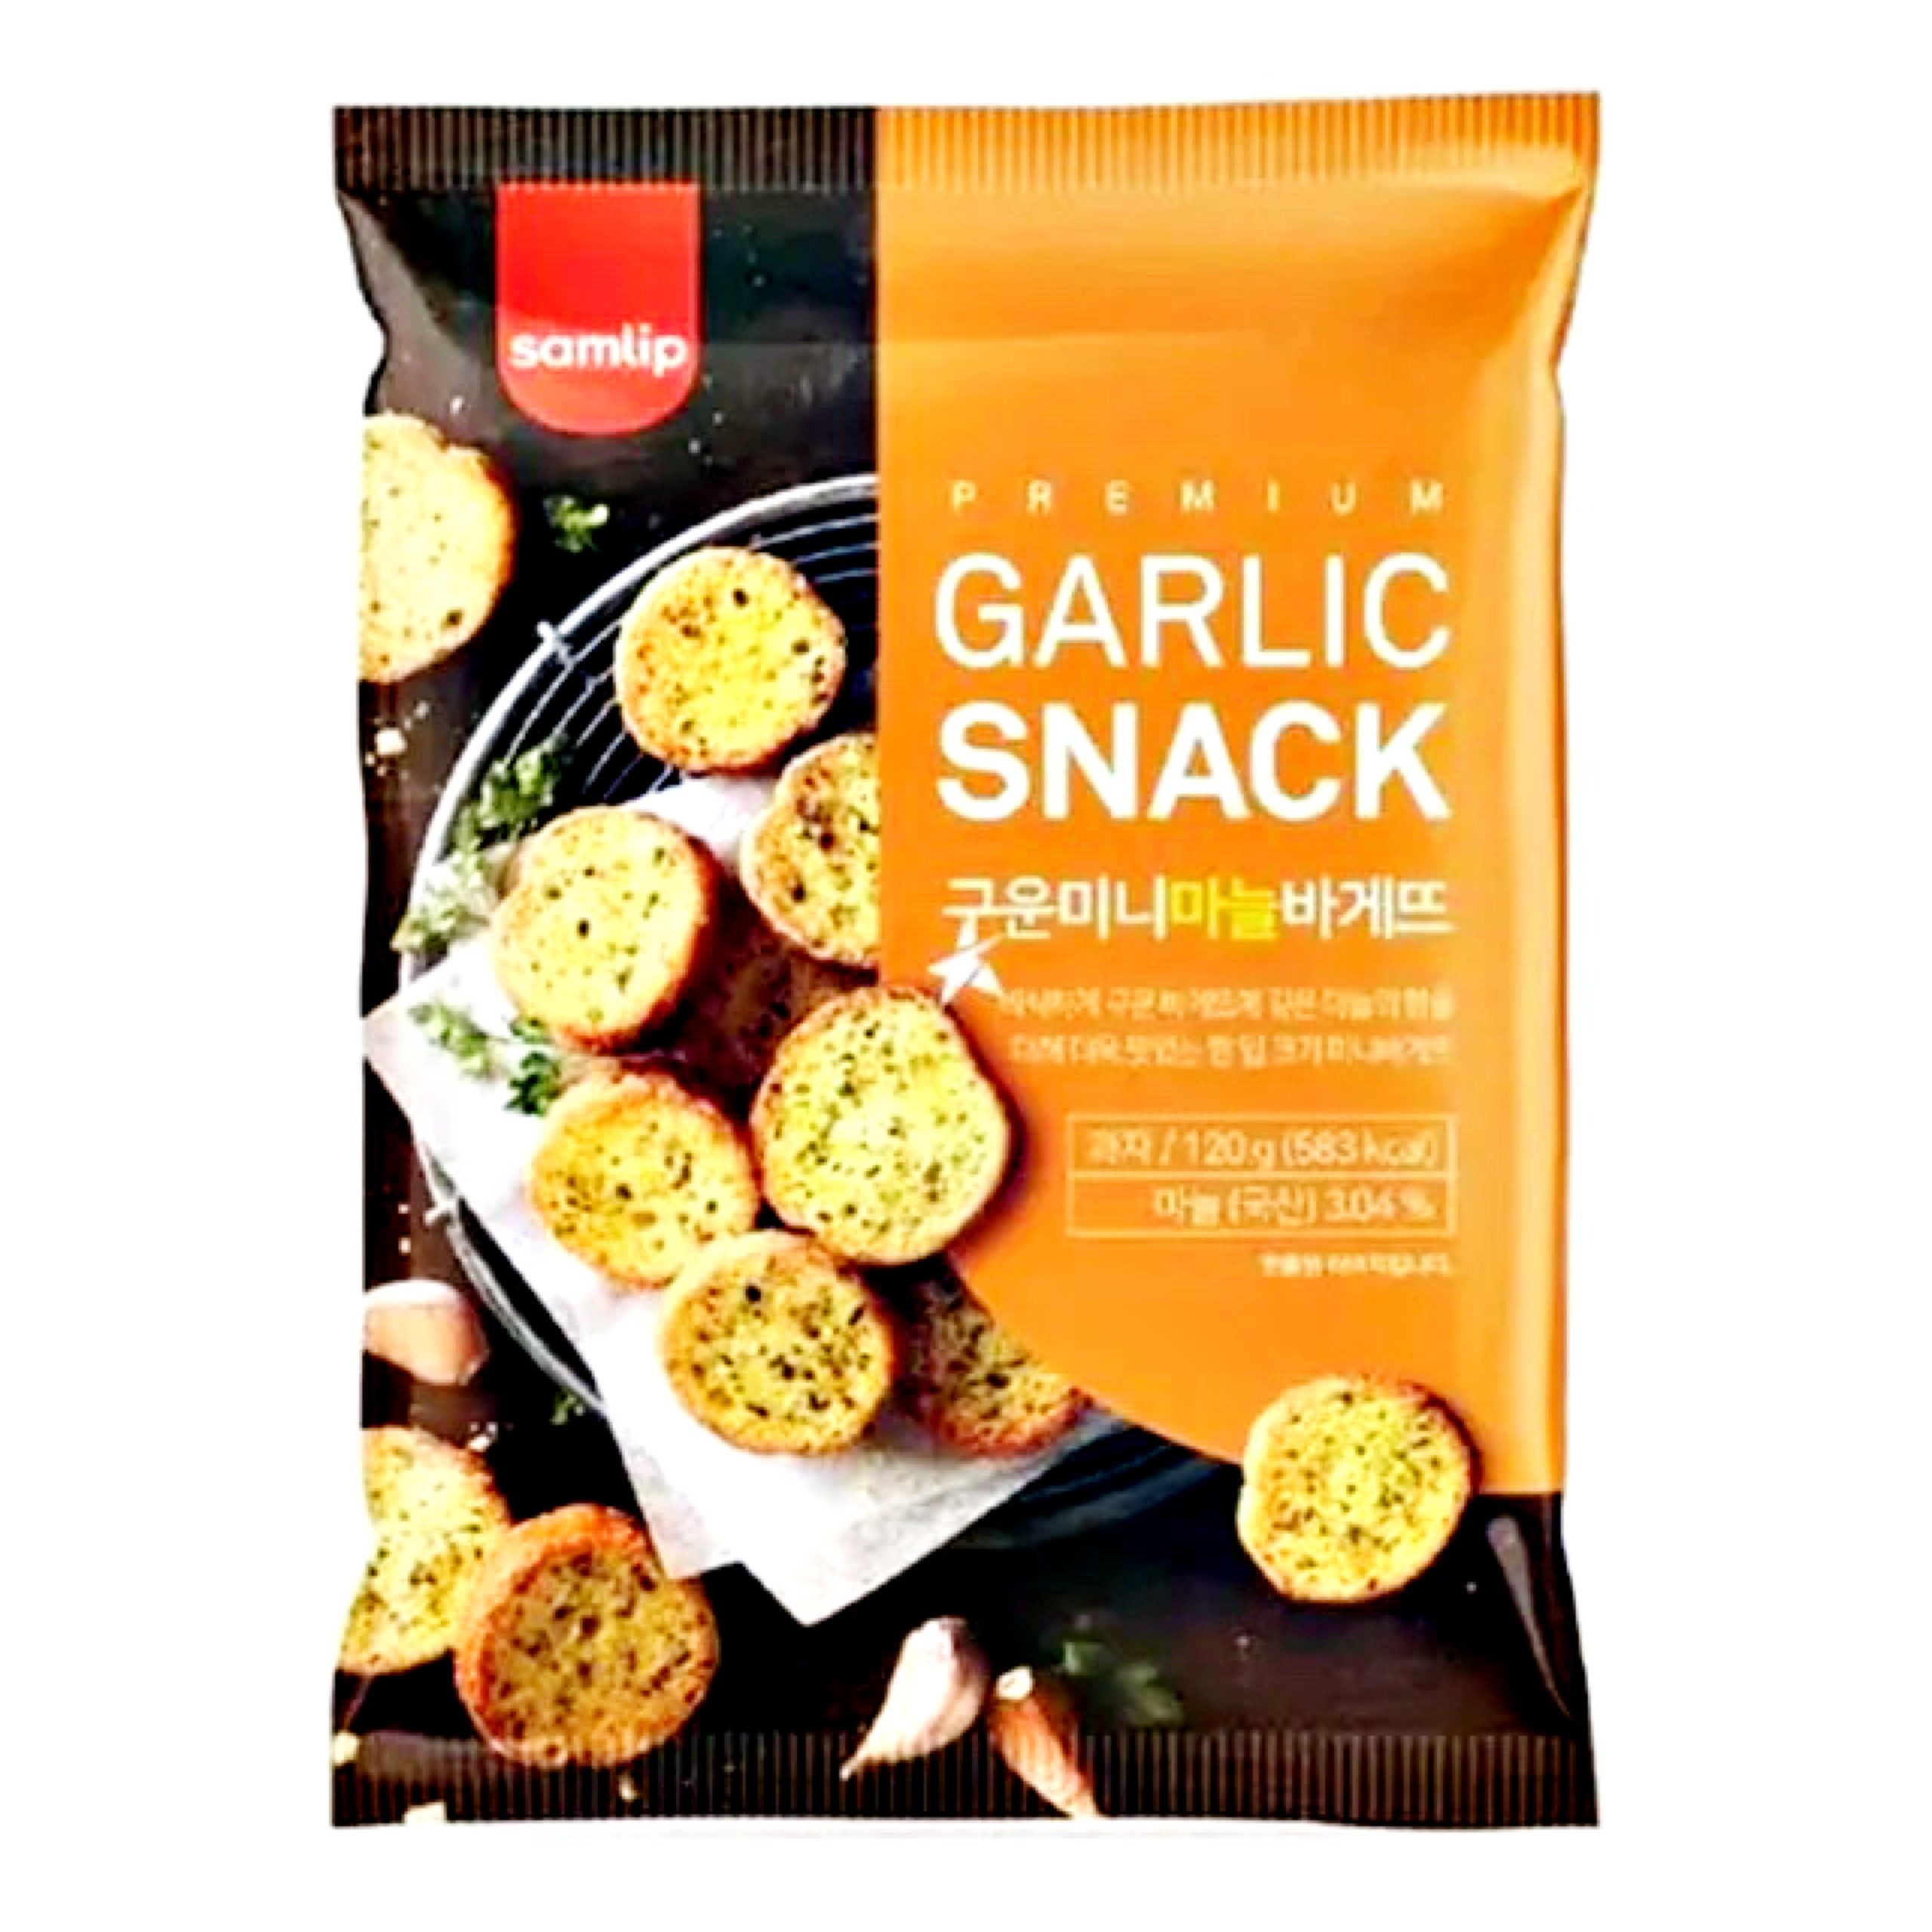 samlip-premium-garlic-snack